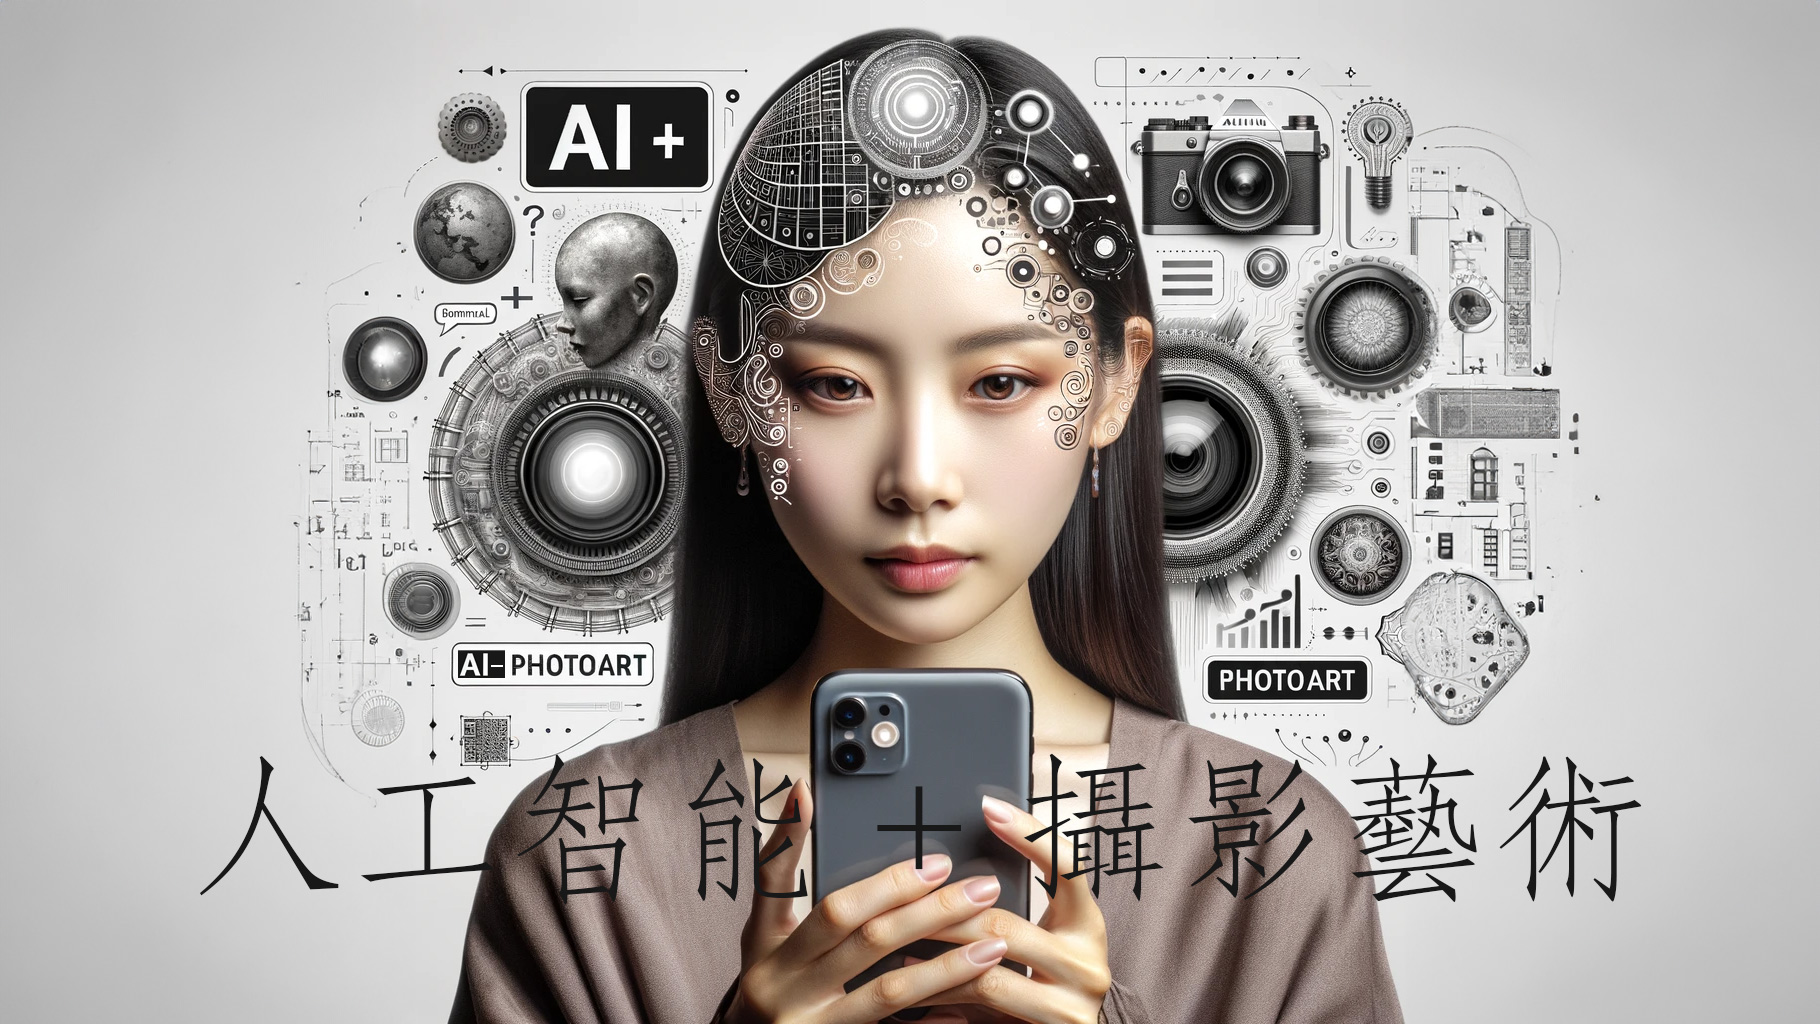 Ai + PhotoArt – 人工智能攝影藝術 – 沒有課綱、只有不斷精進與學習！善用工具創造藝術！